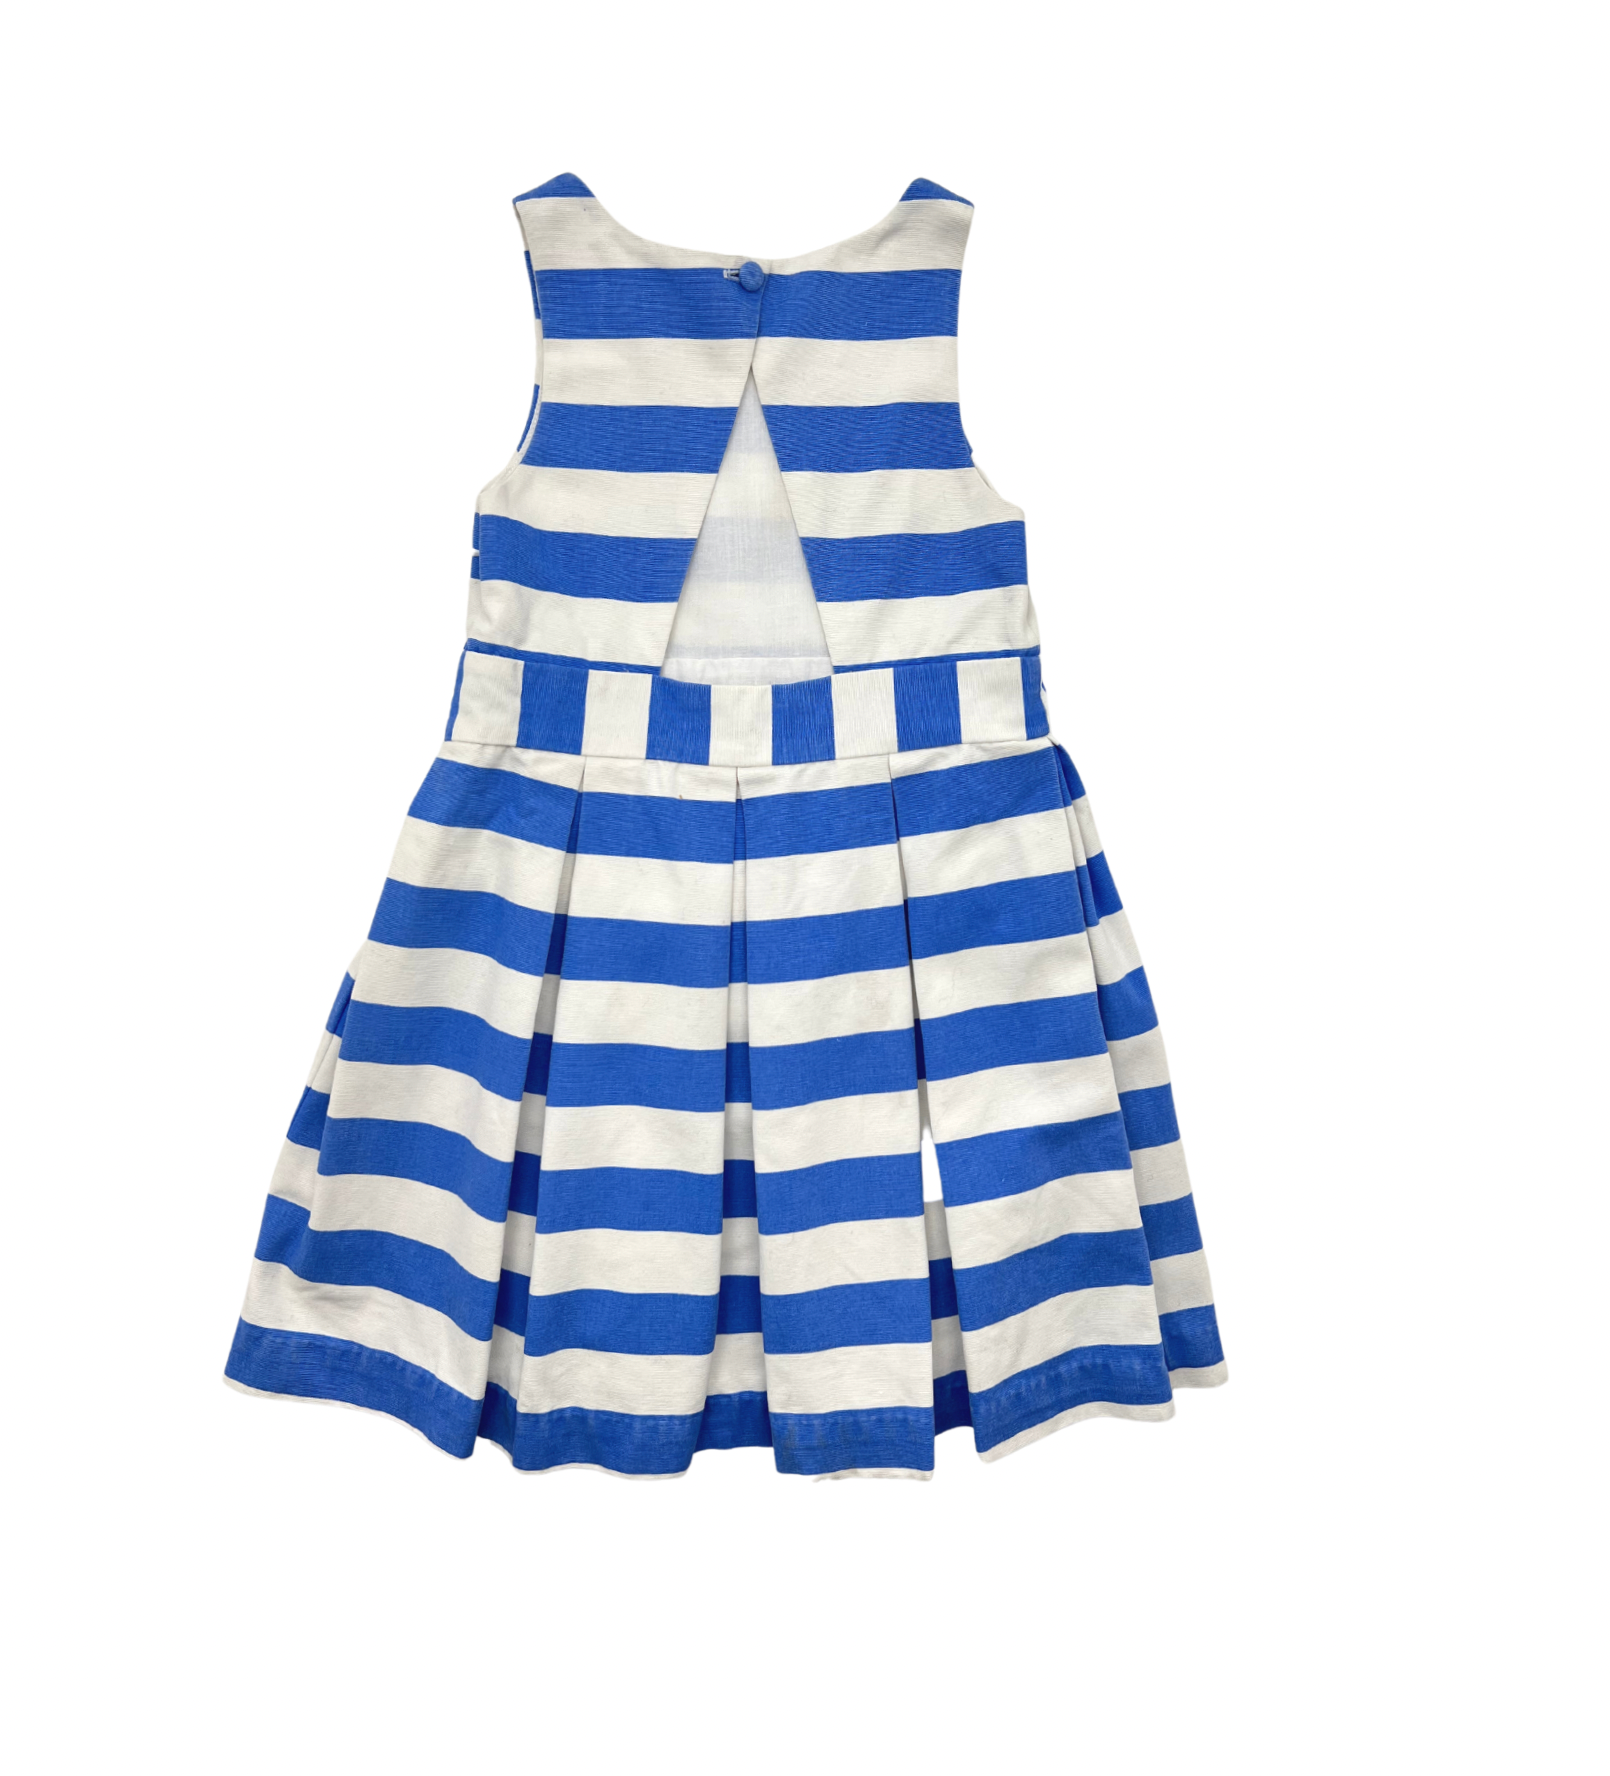 JACADI - Striped dress - 6 years old